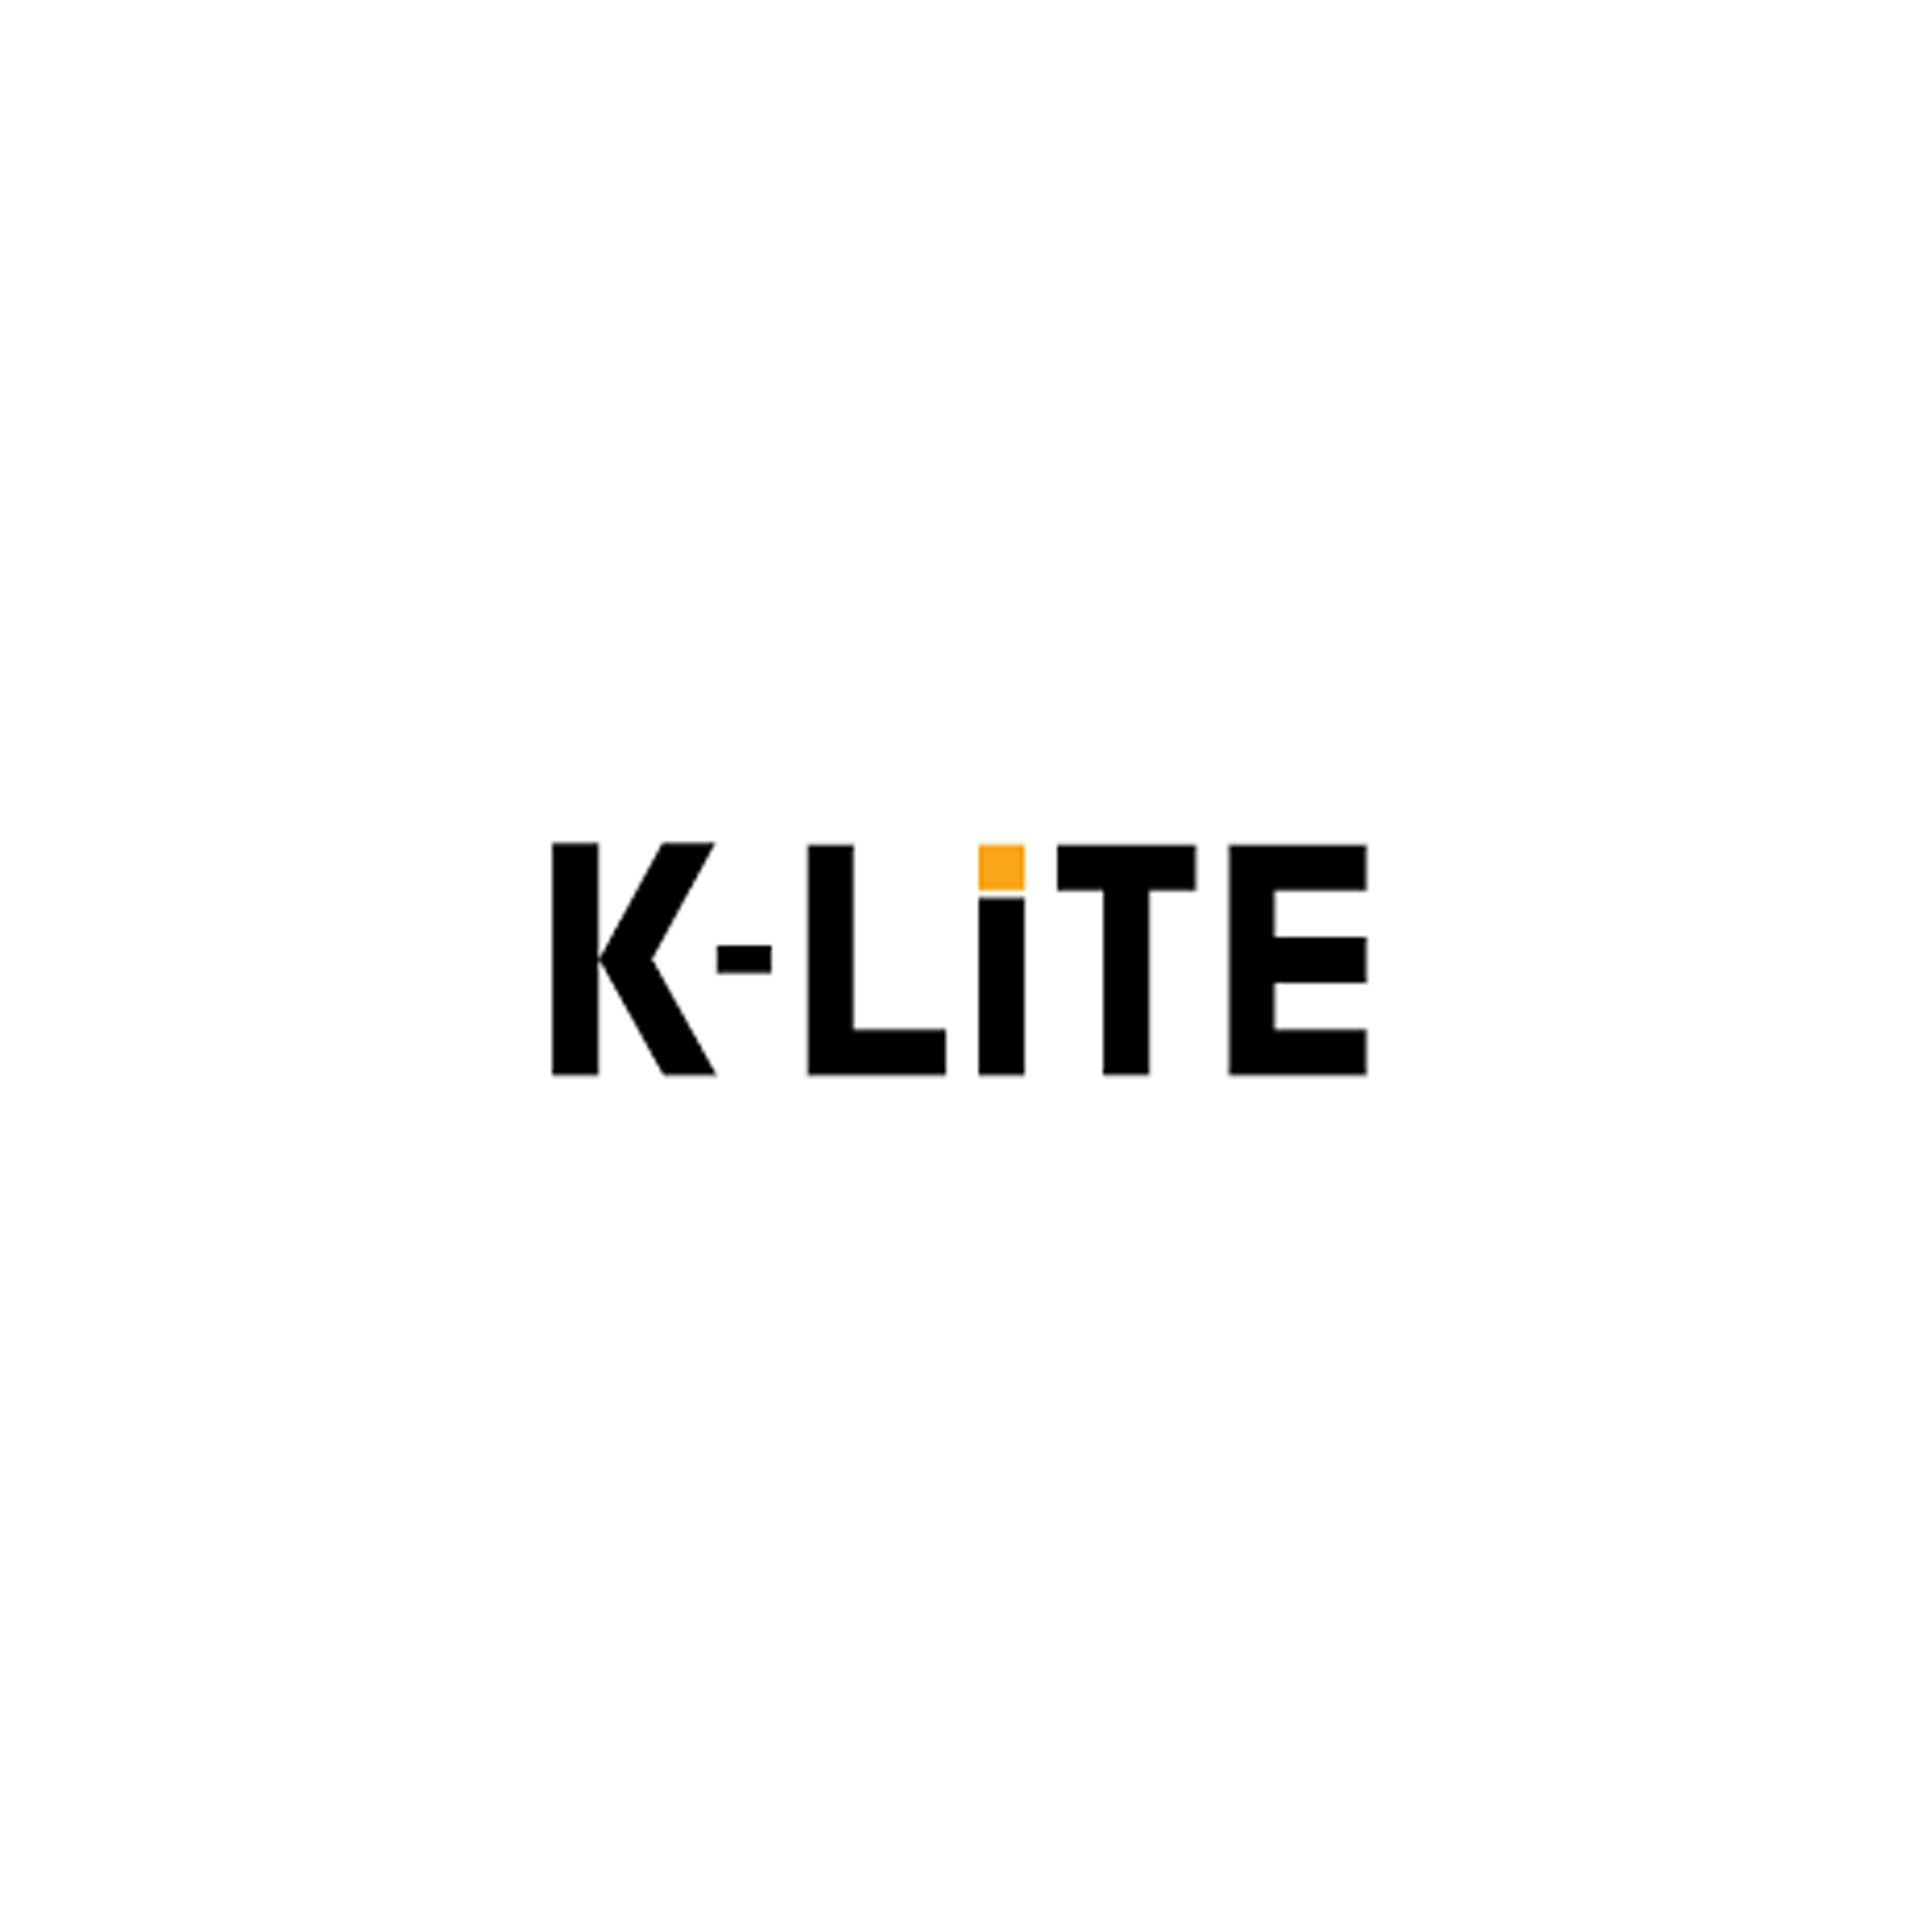 Product Brand: K-Lite